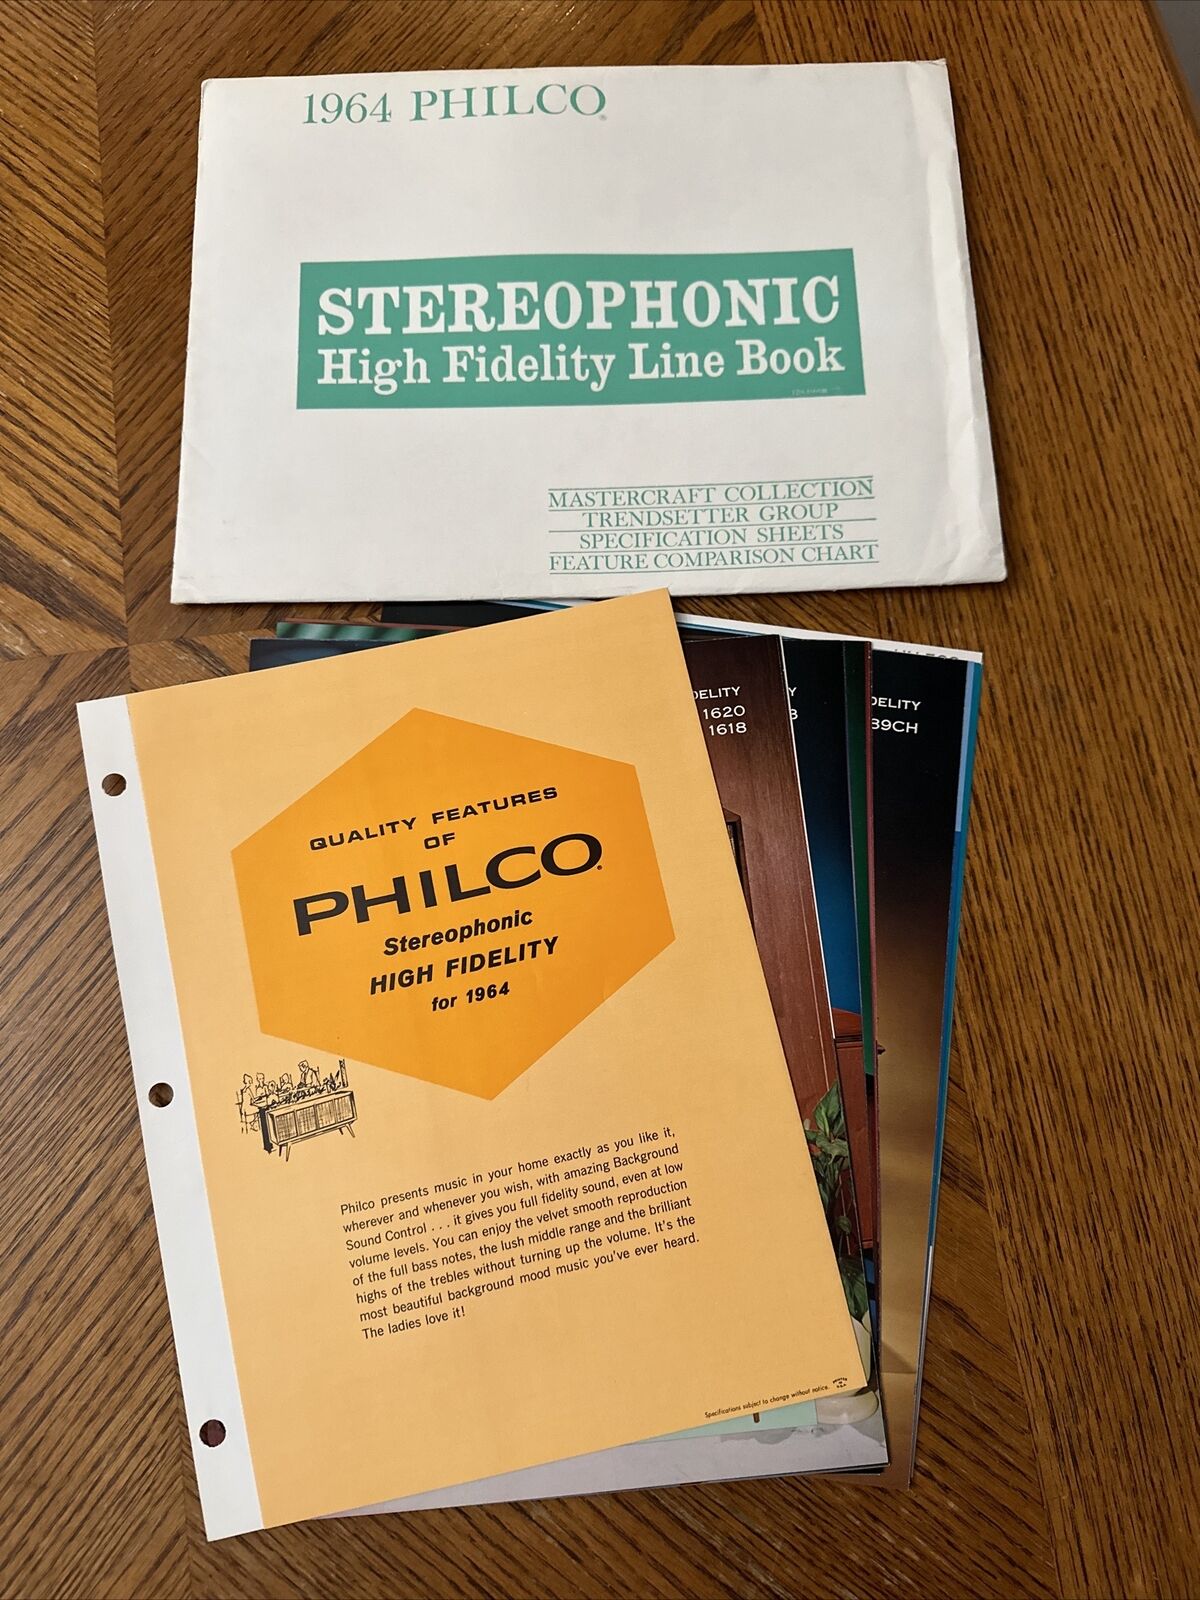 Philco Company 1964 Stereophonic High Fidelity Advertising Portfolio Line Book